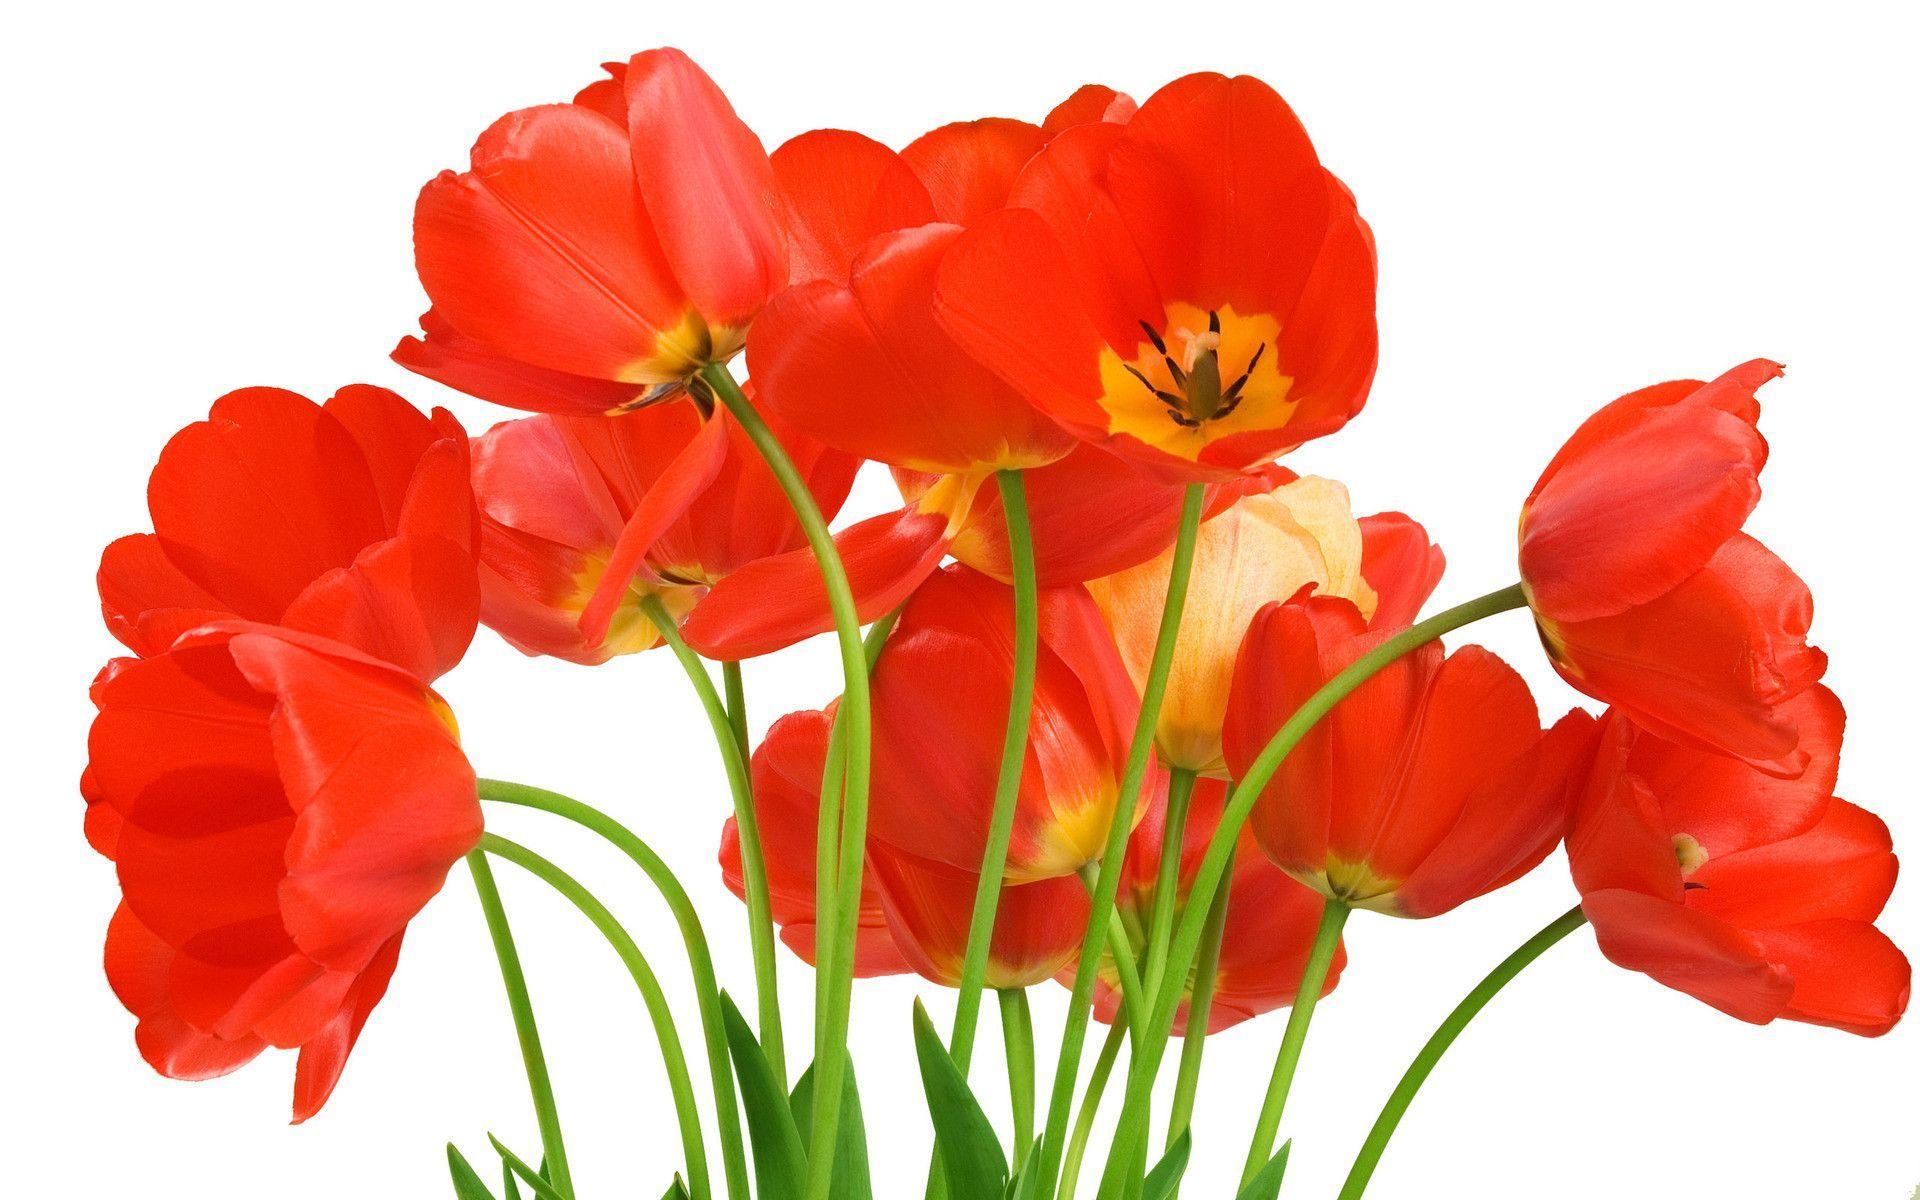 beautiful red tulips